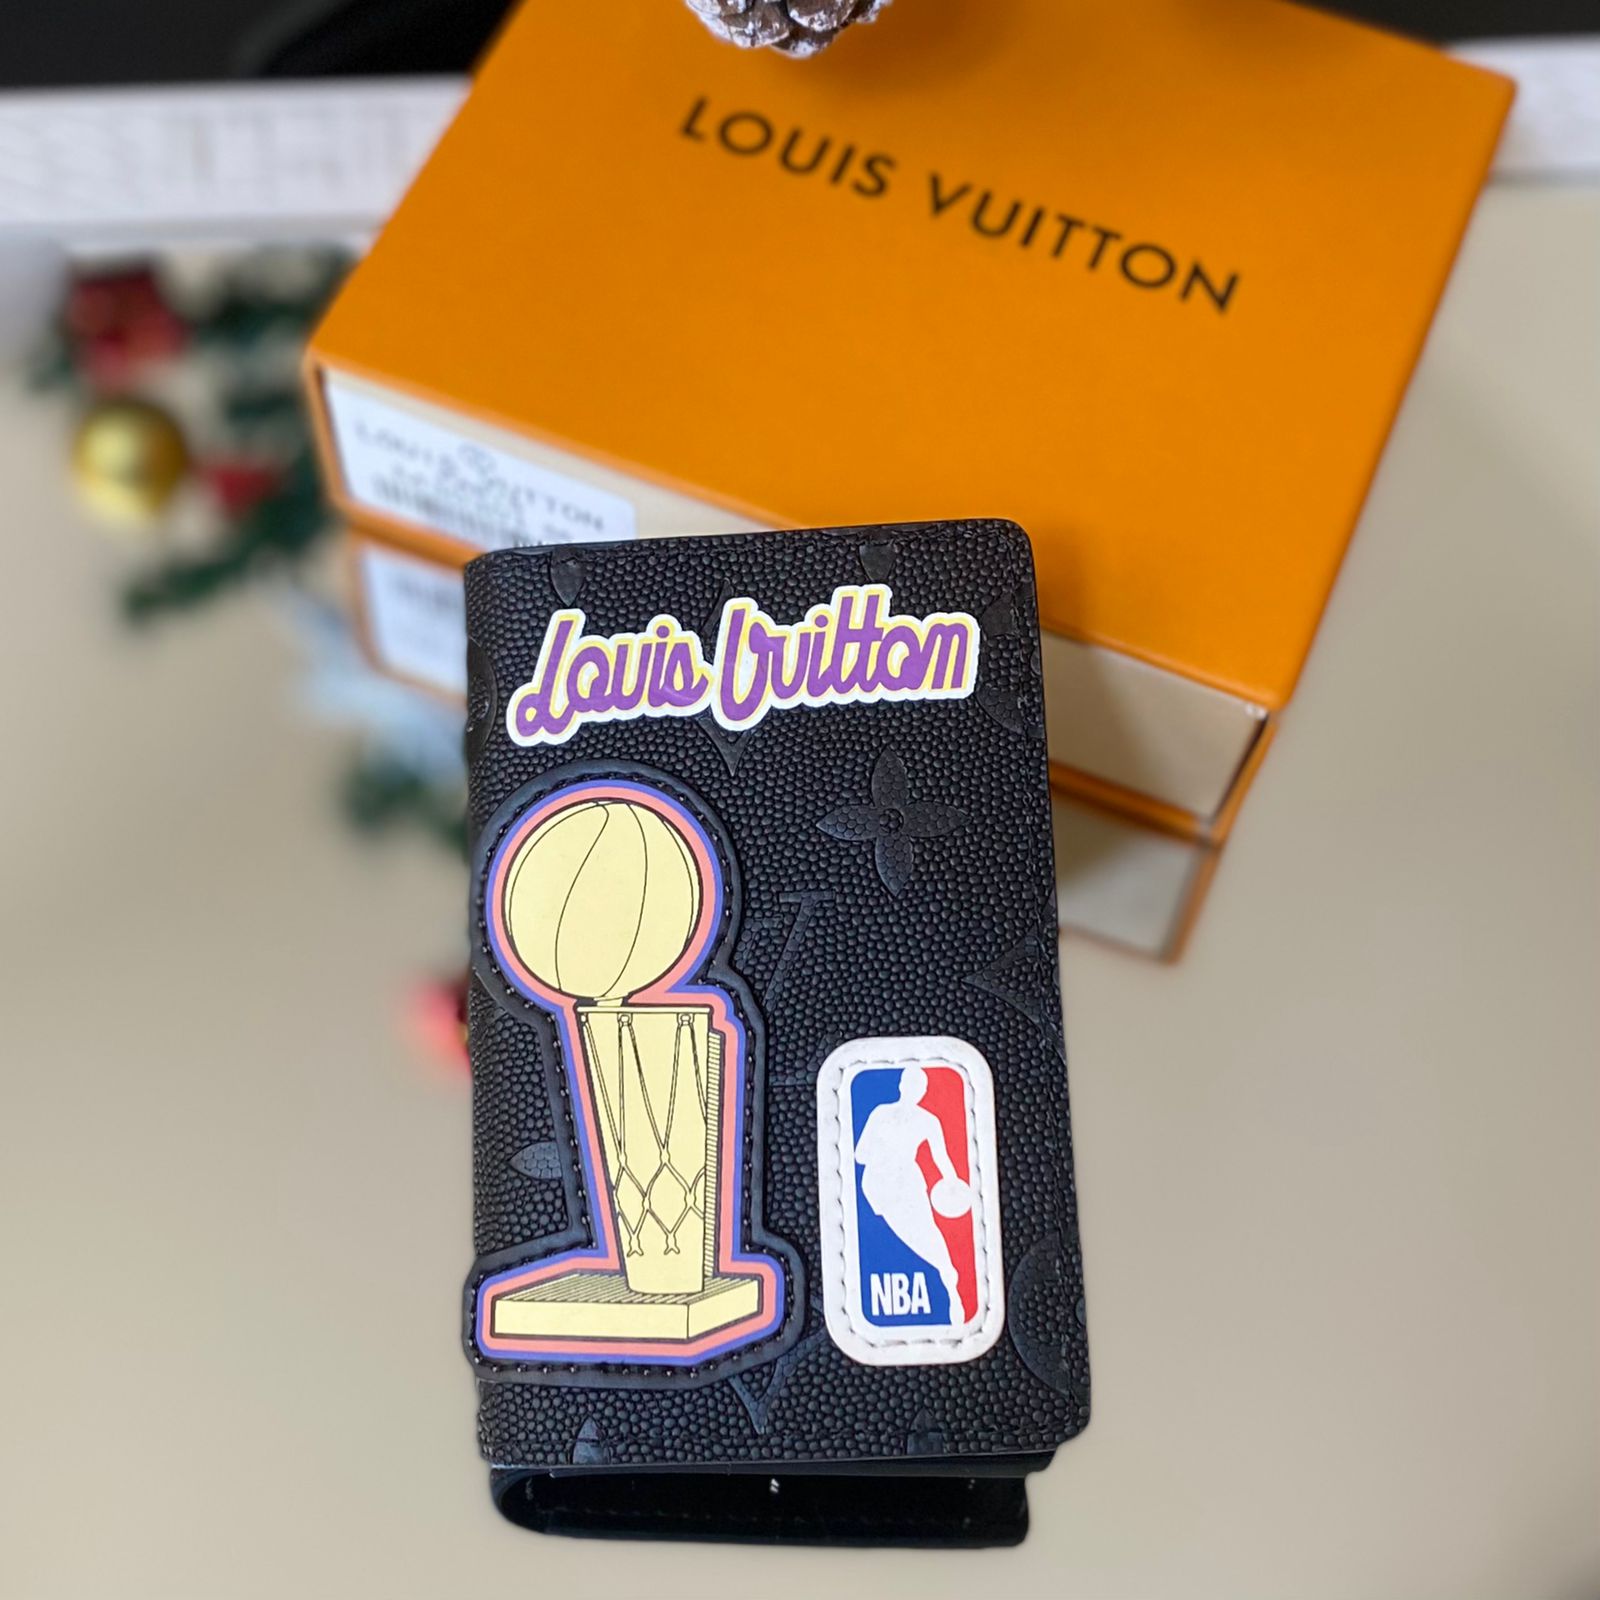 Porta cartão Louis Vuitton NBA – Possessive